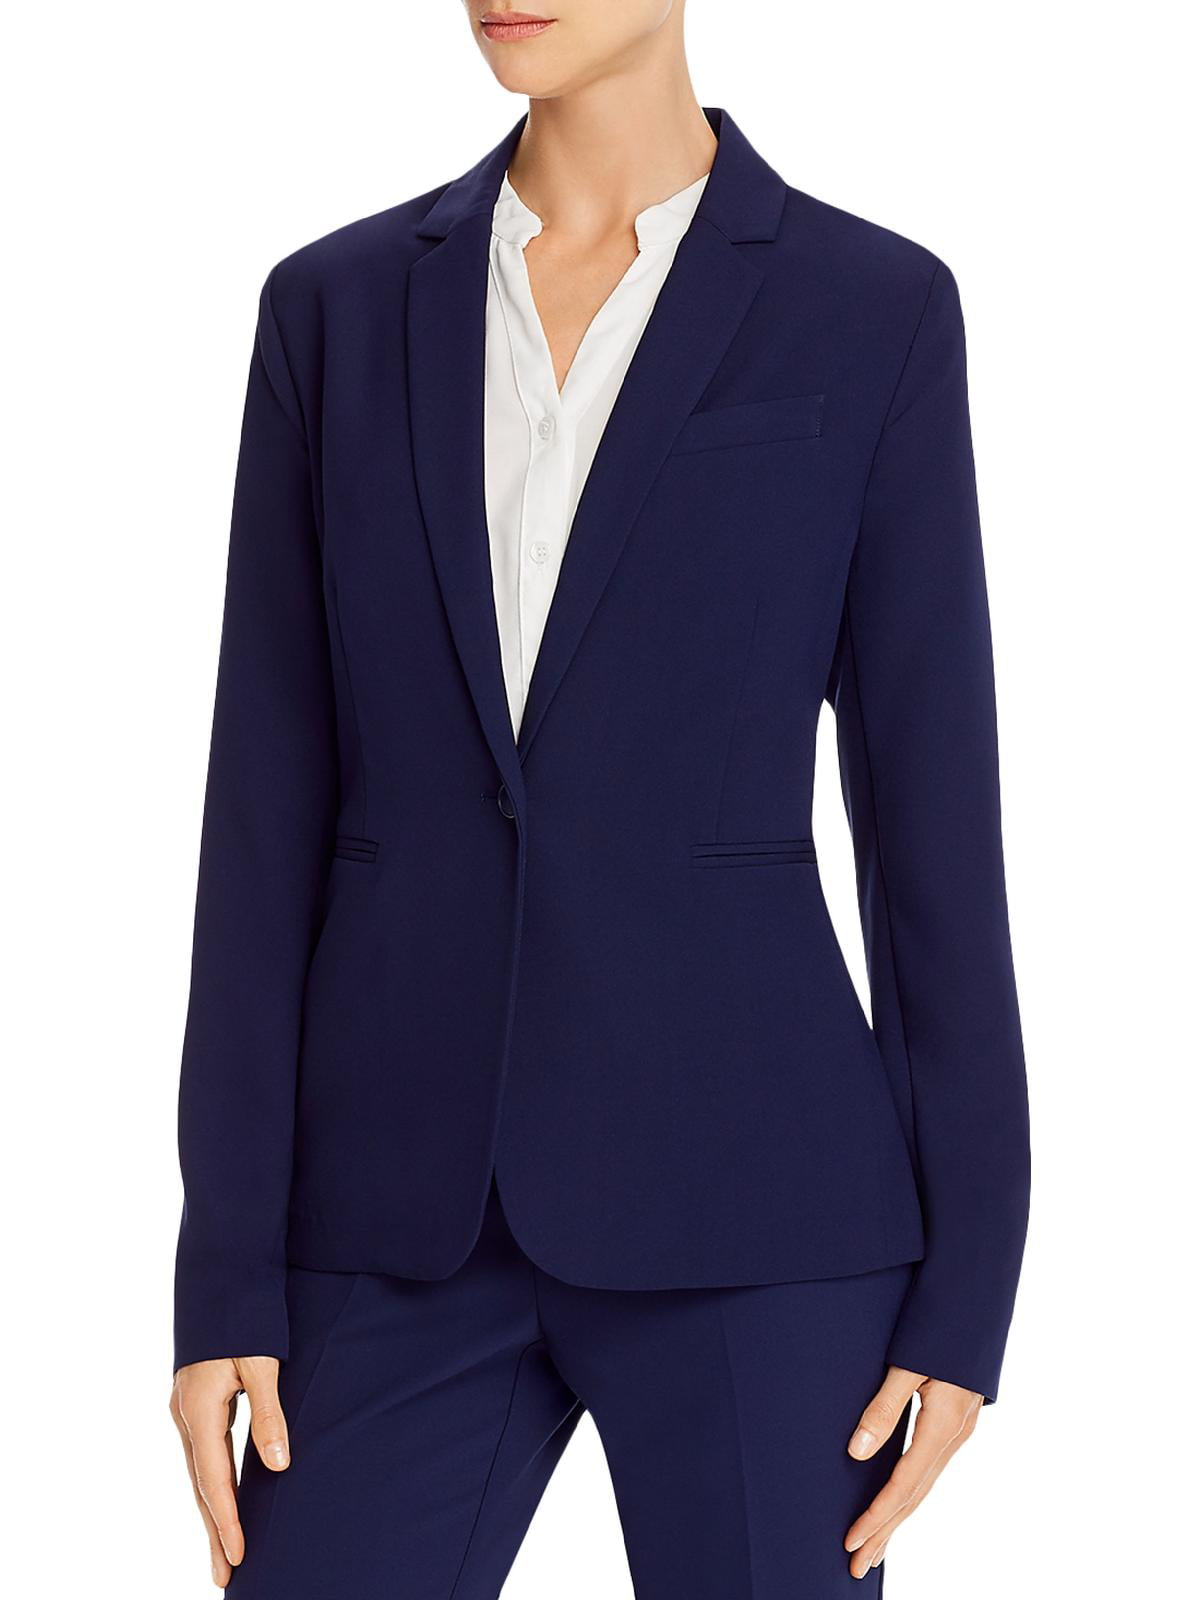 Winwinus Women Flexible Fit Solid Office Suits 1 Button Blazer